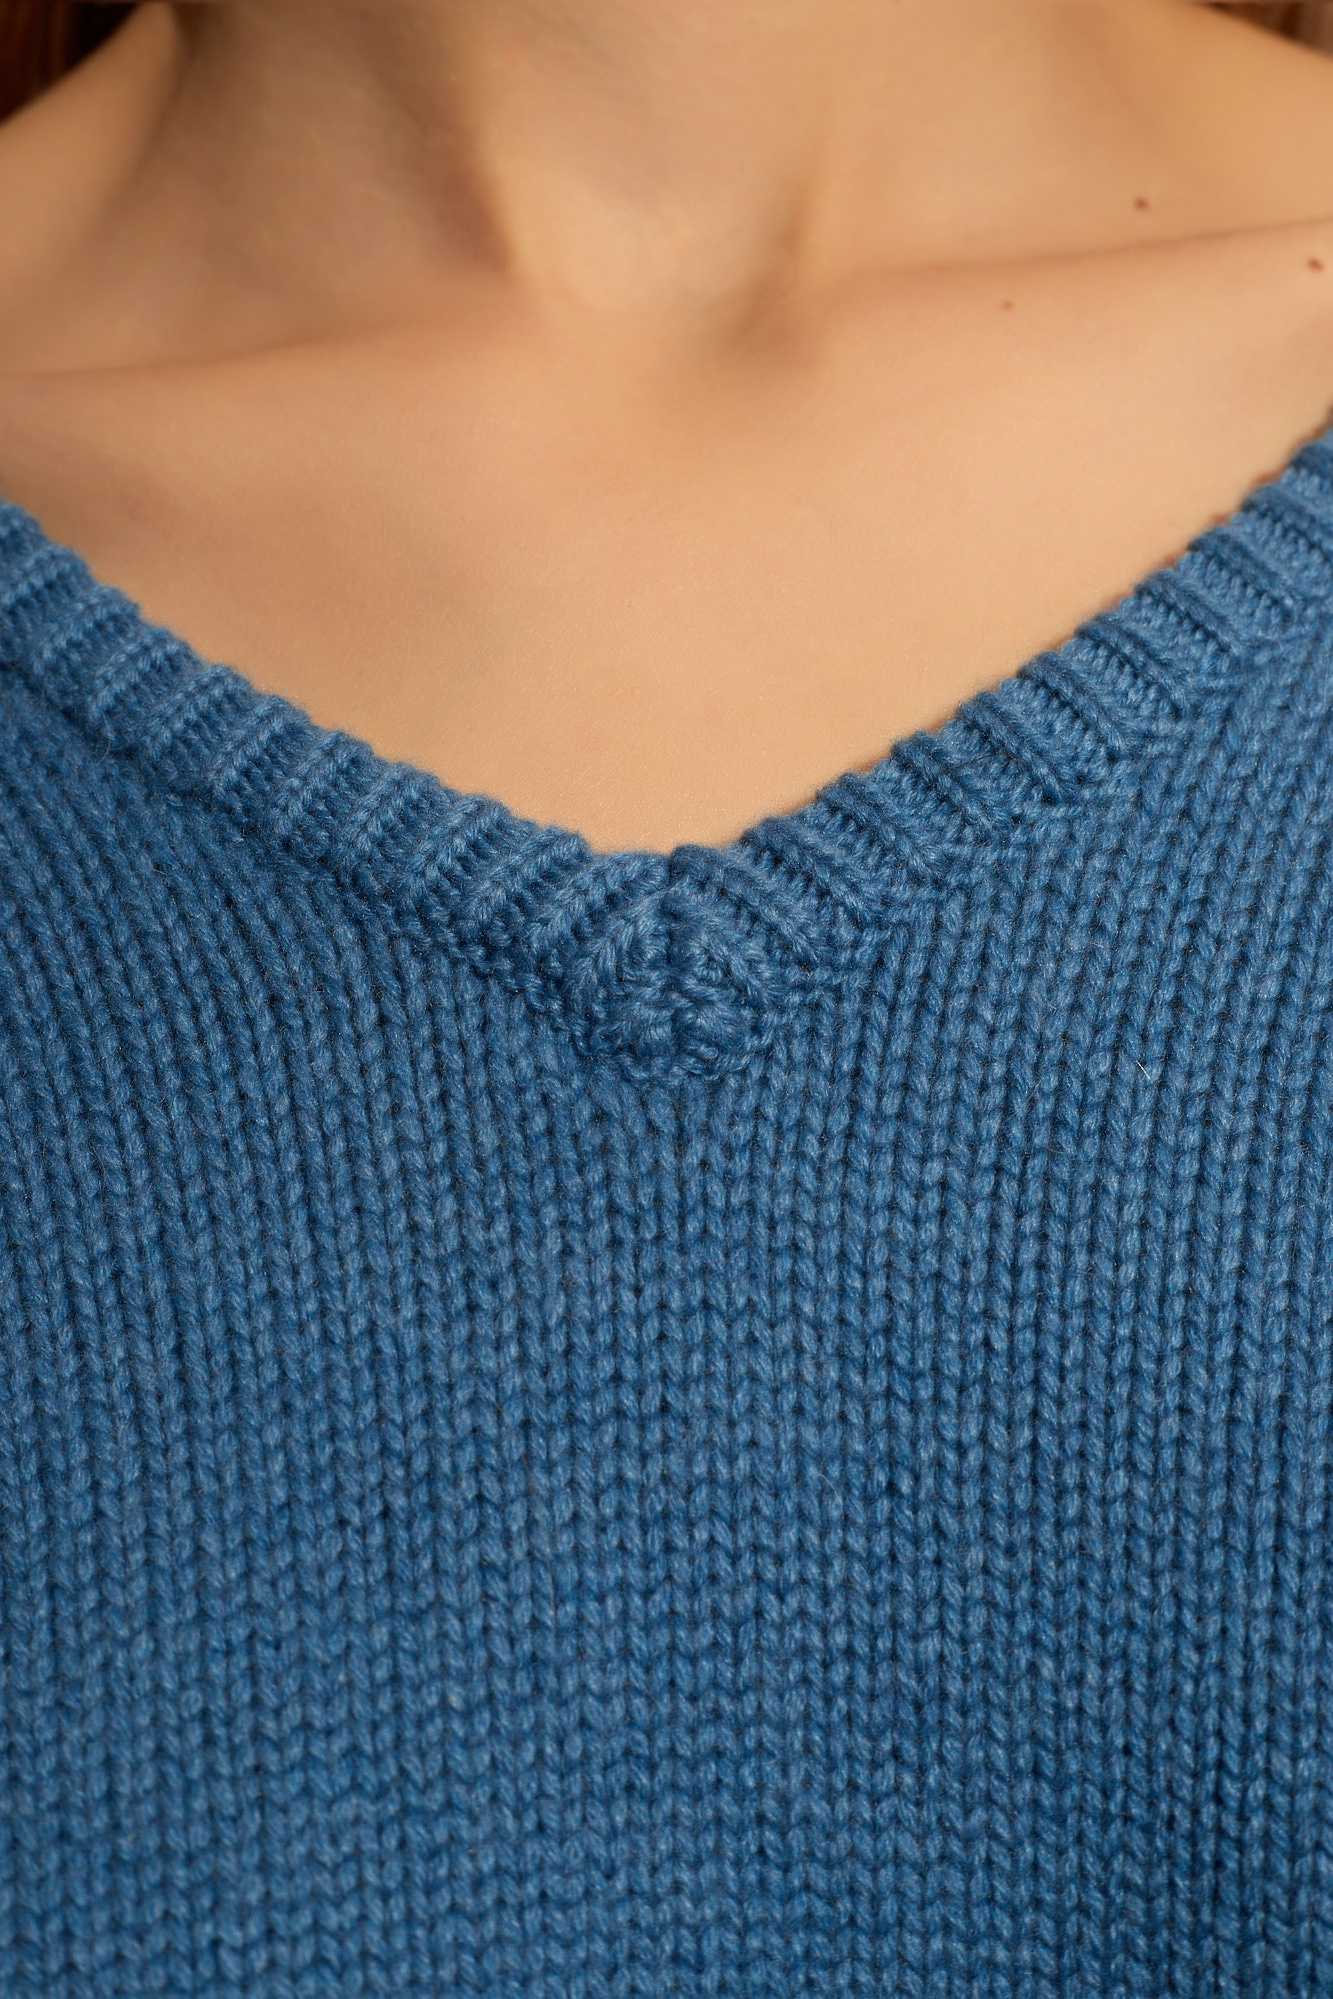 Lisa Yang ‘Mona’ sweater